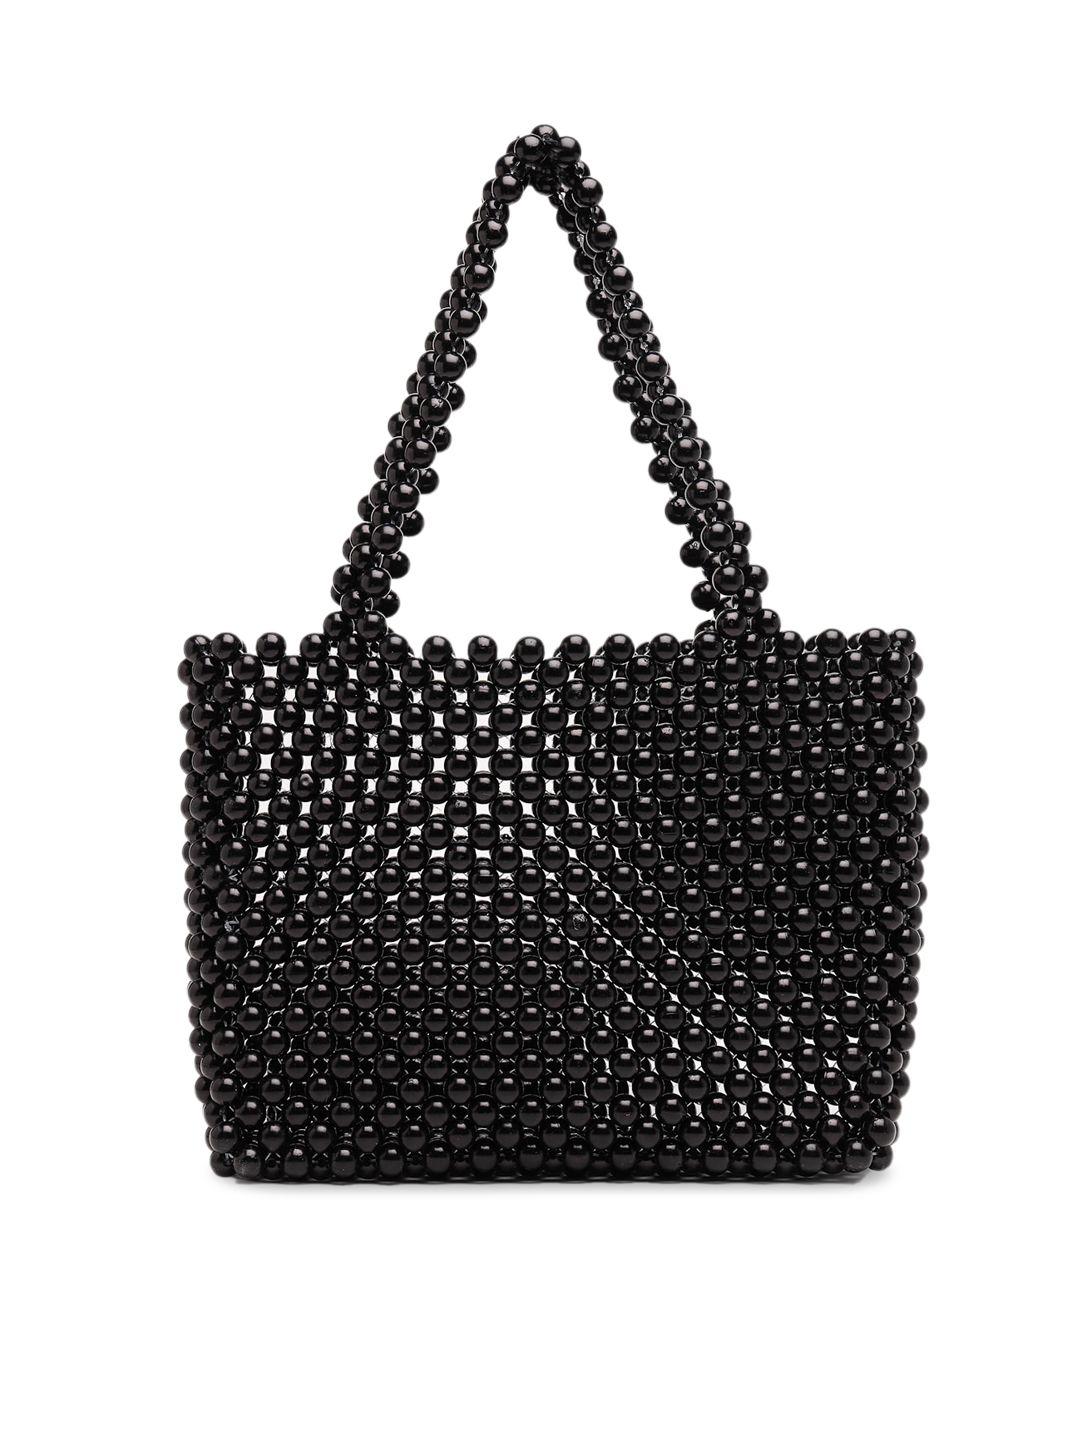 aquatan black textured structured handheld bag with tasselled